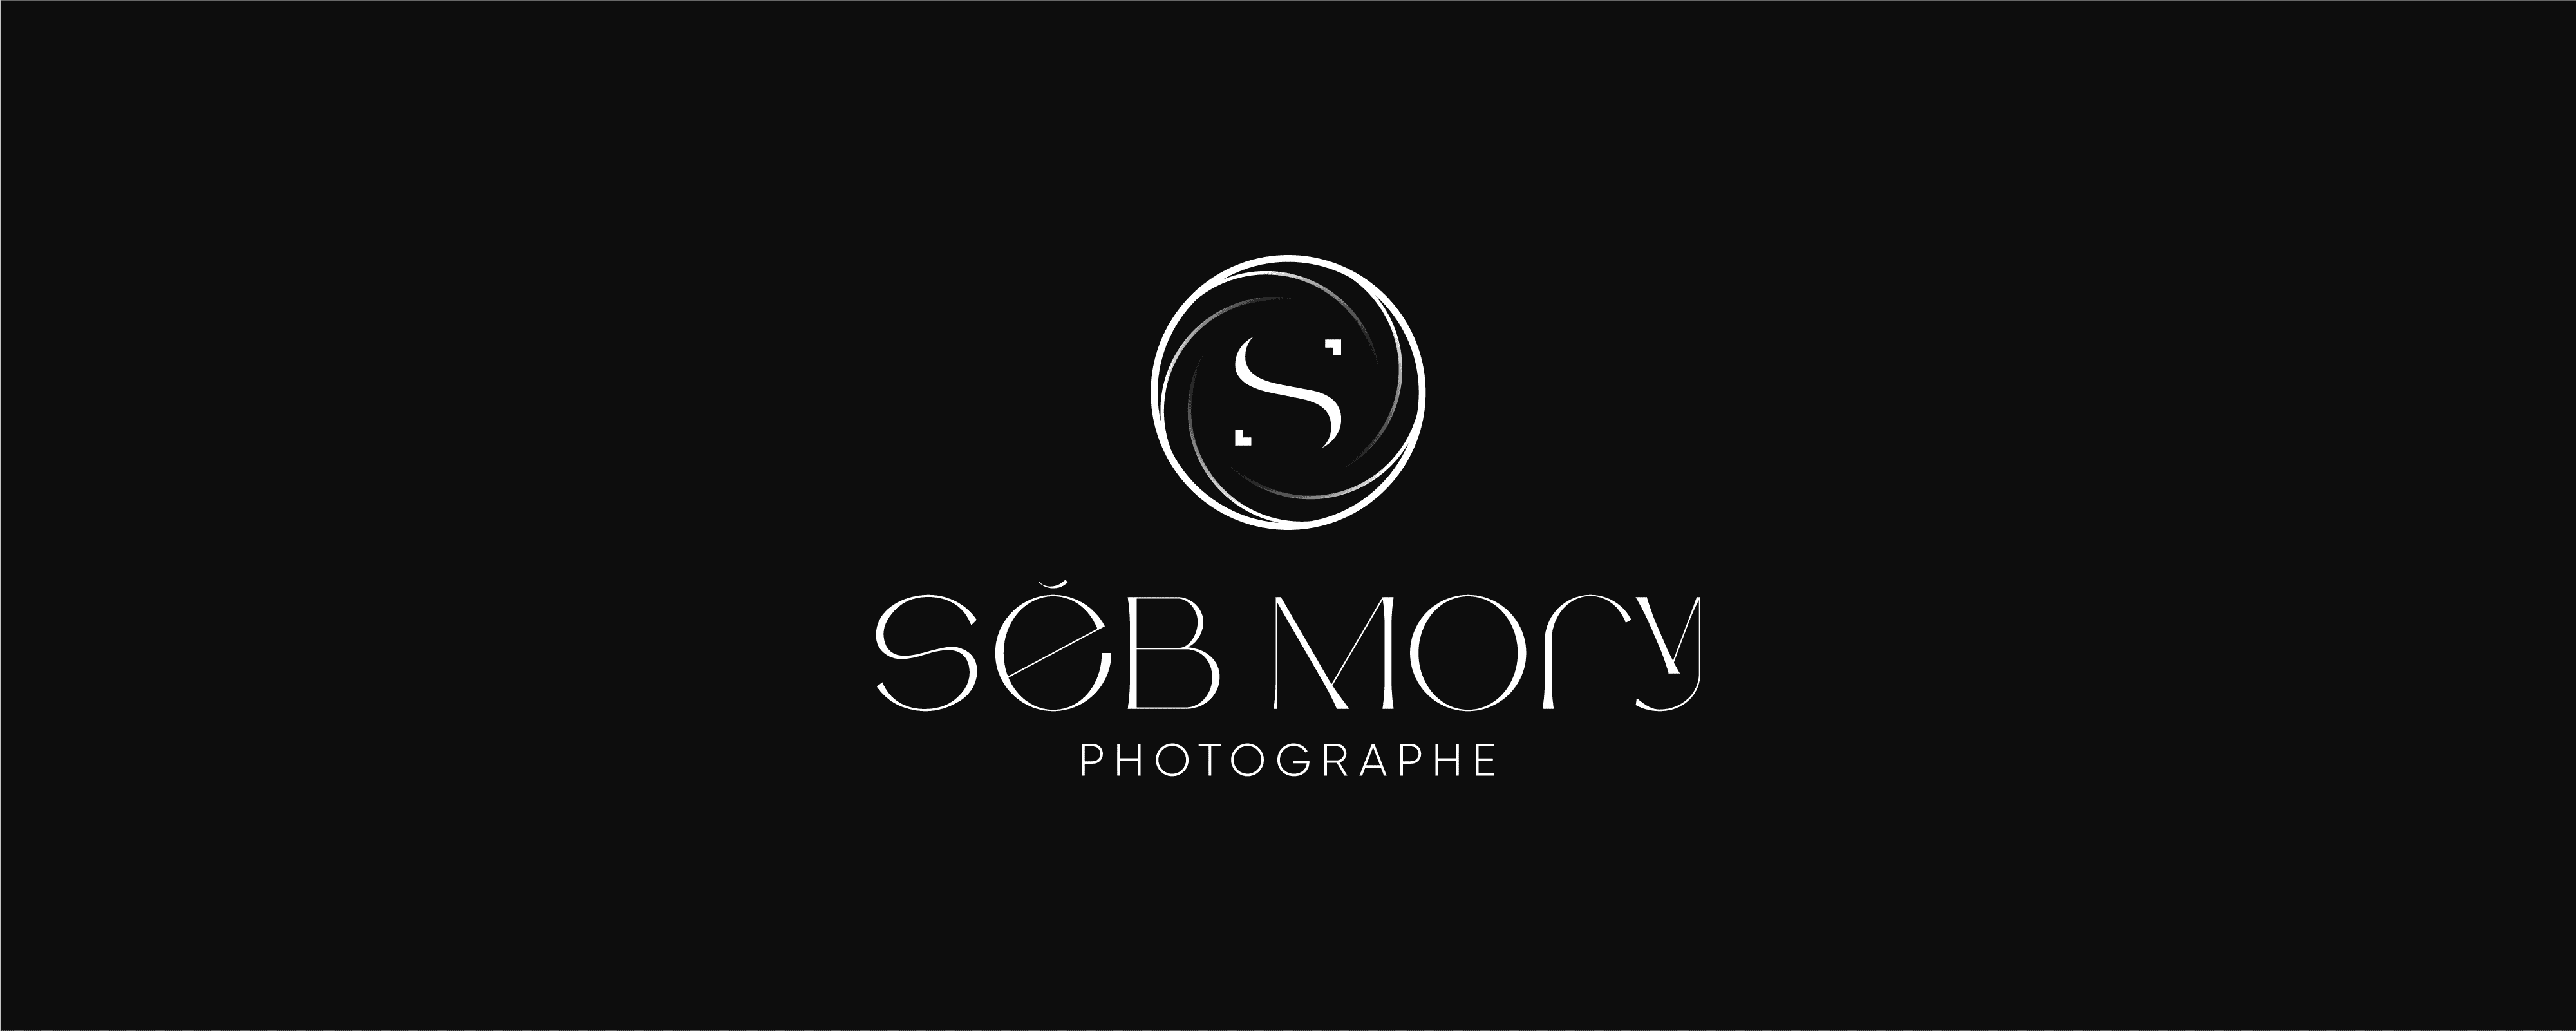 Logo 2021 pour Séb Mory Photographe